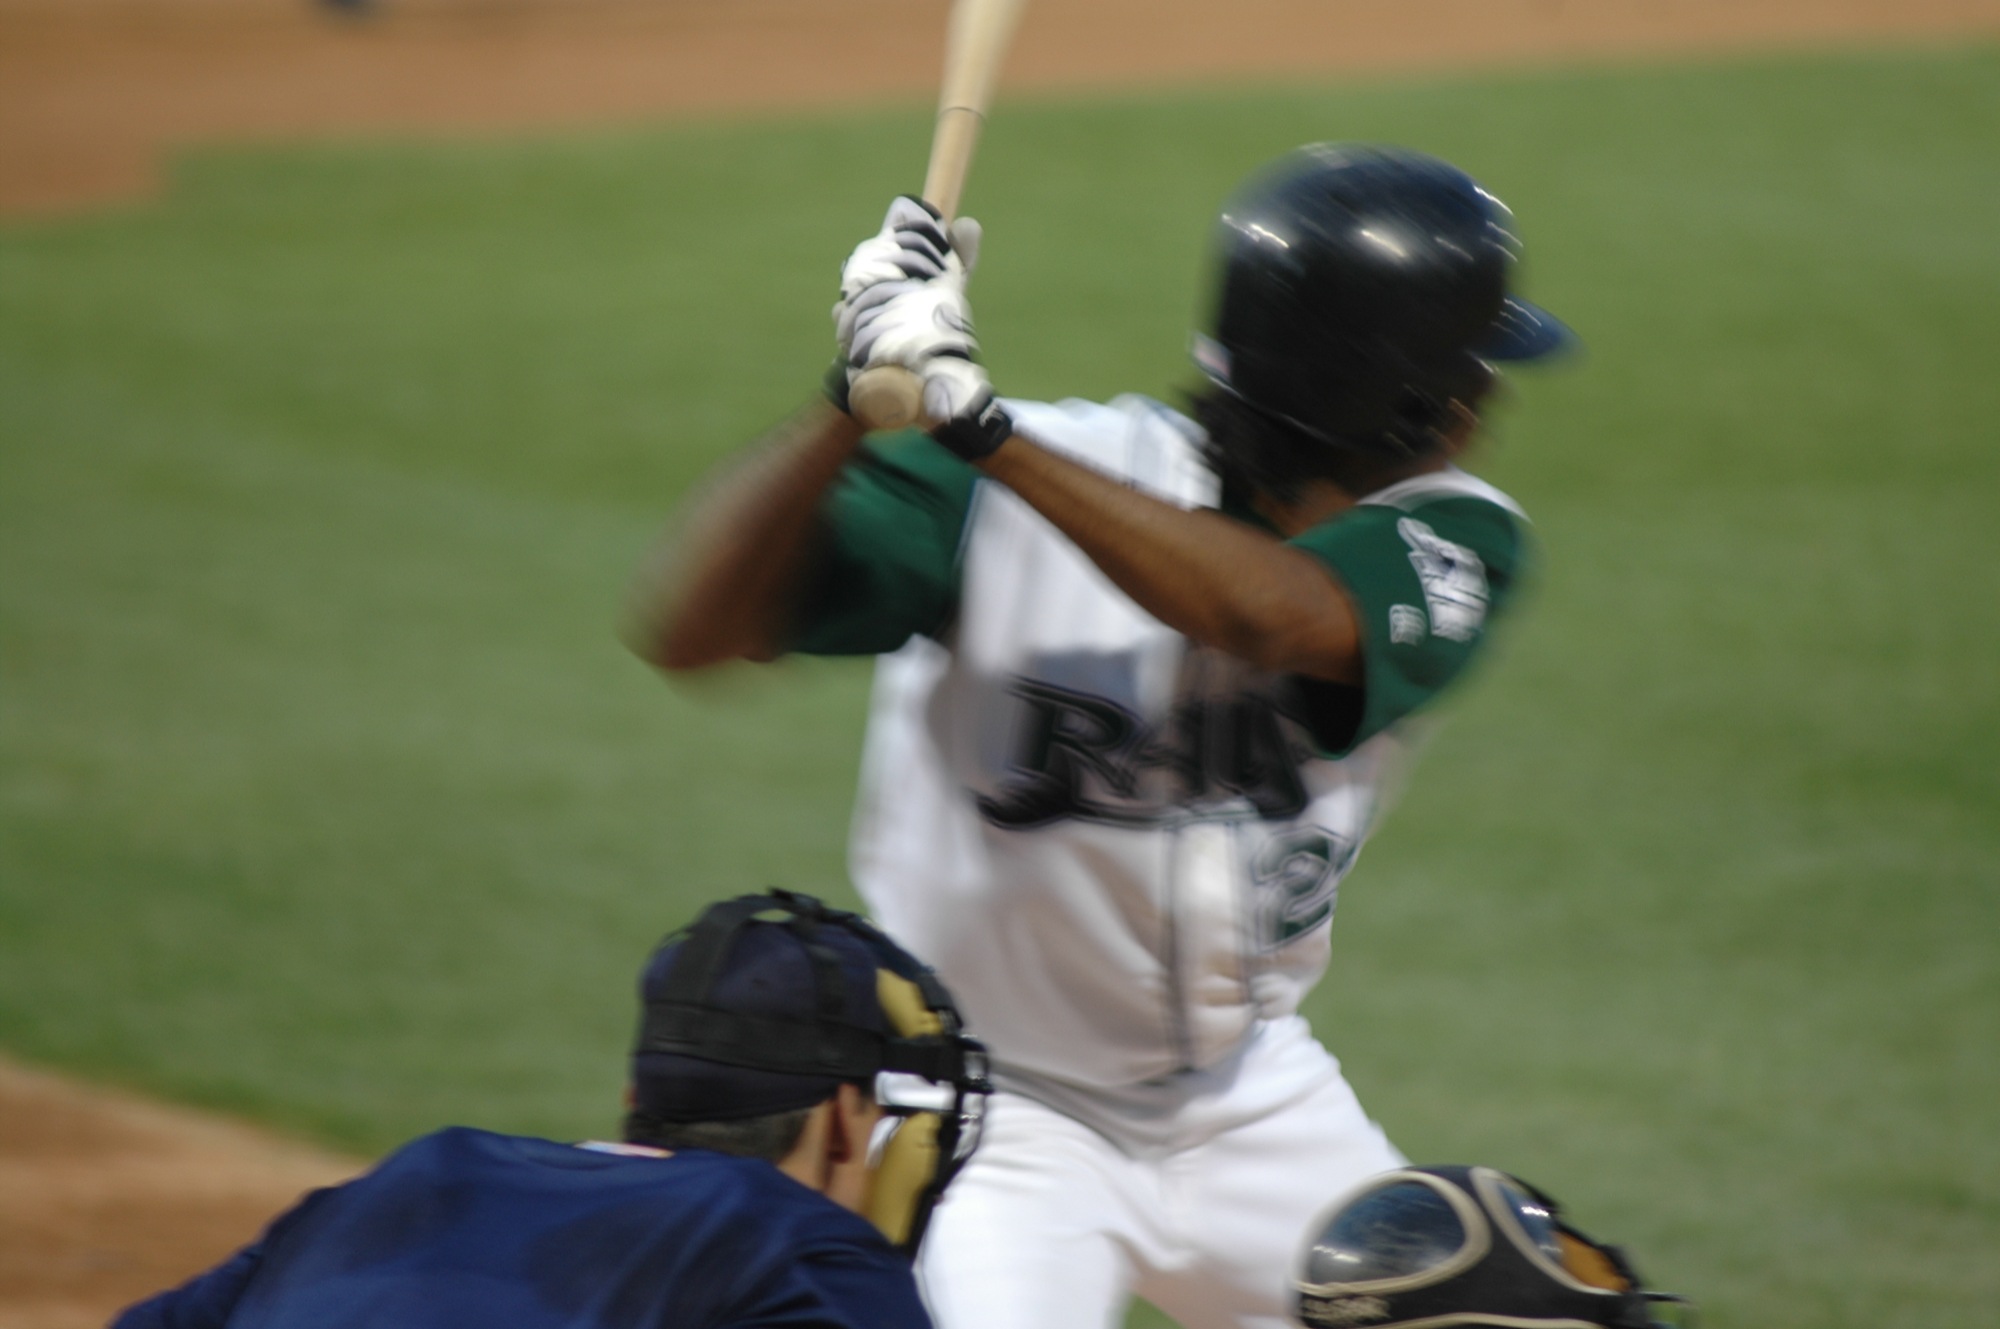 a baseball player holding a bat and wearing a helmet